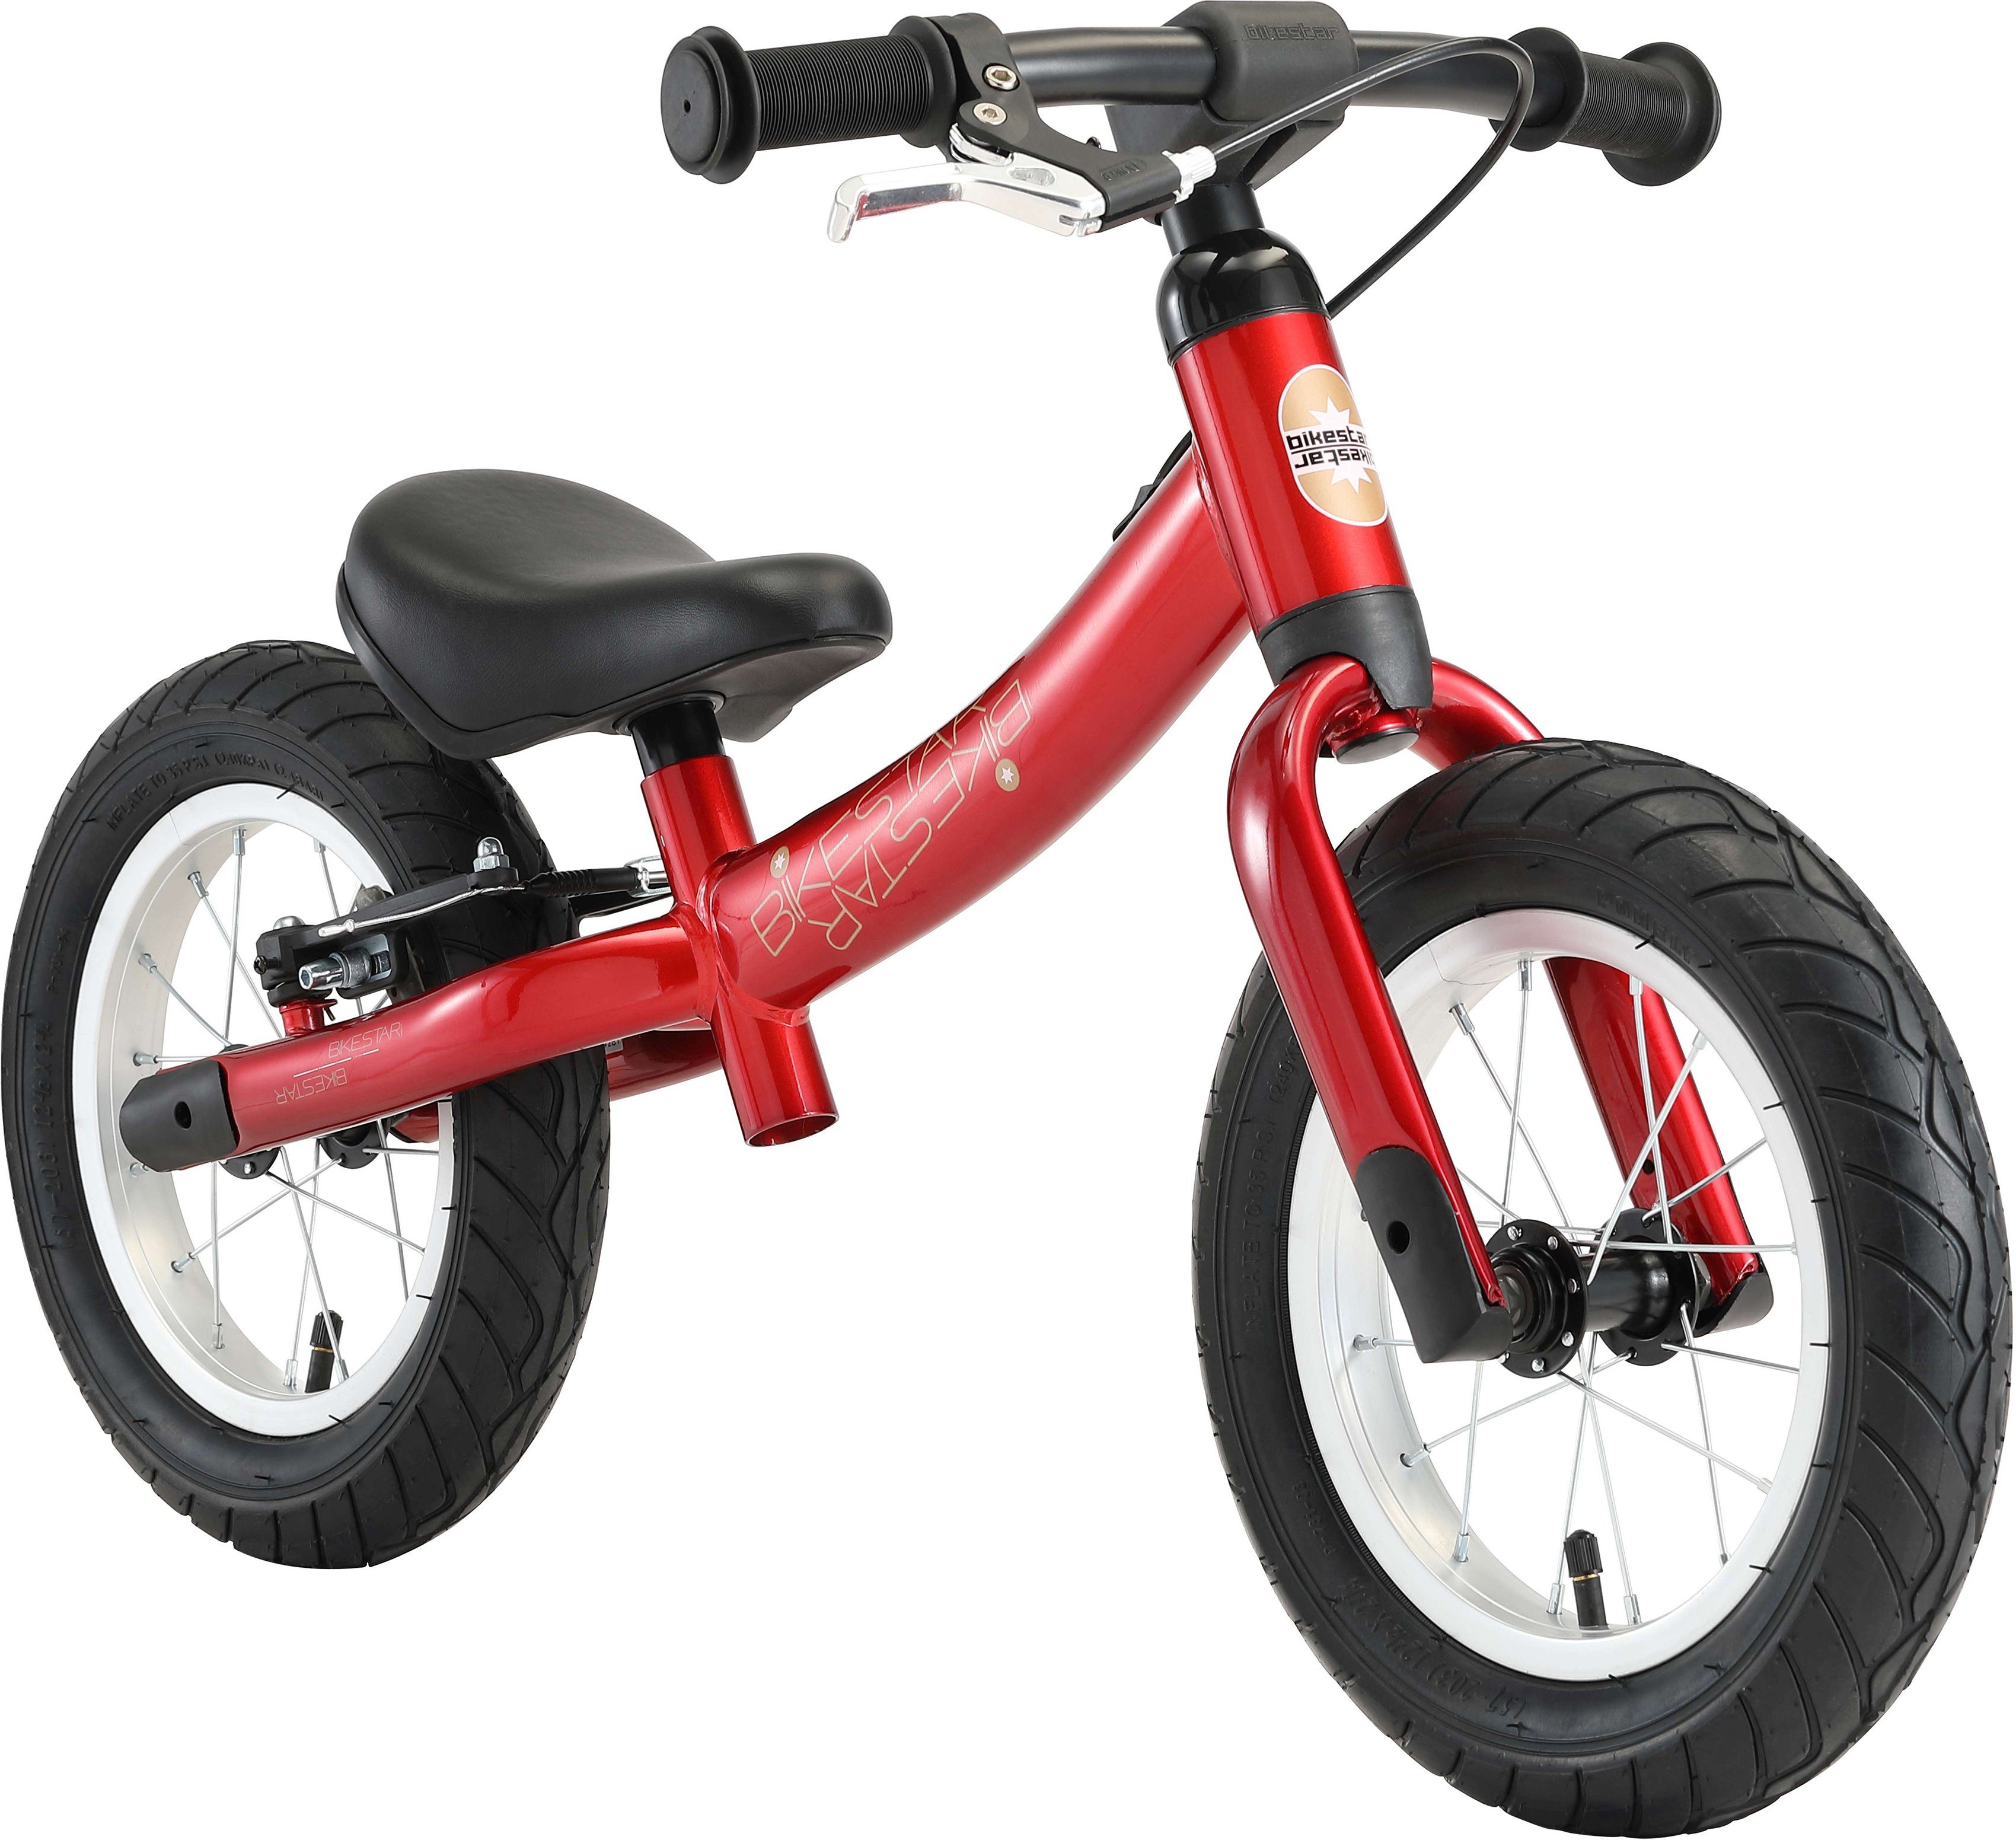 Bikestar Laufrad BIKESTAR Kinderlaufrad ab 3 Jahre 12 Zoll Flex 12 Zoll rot